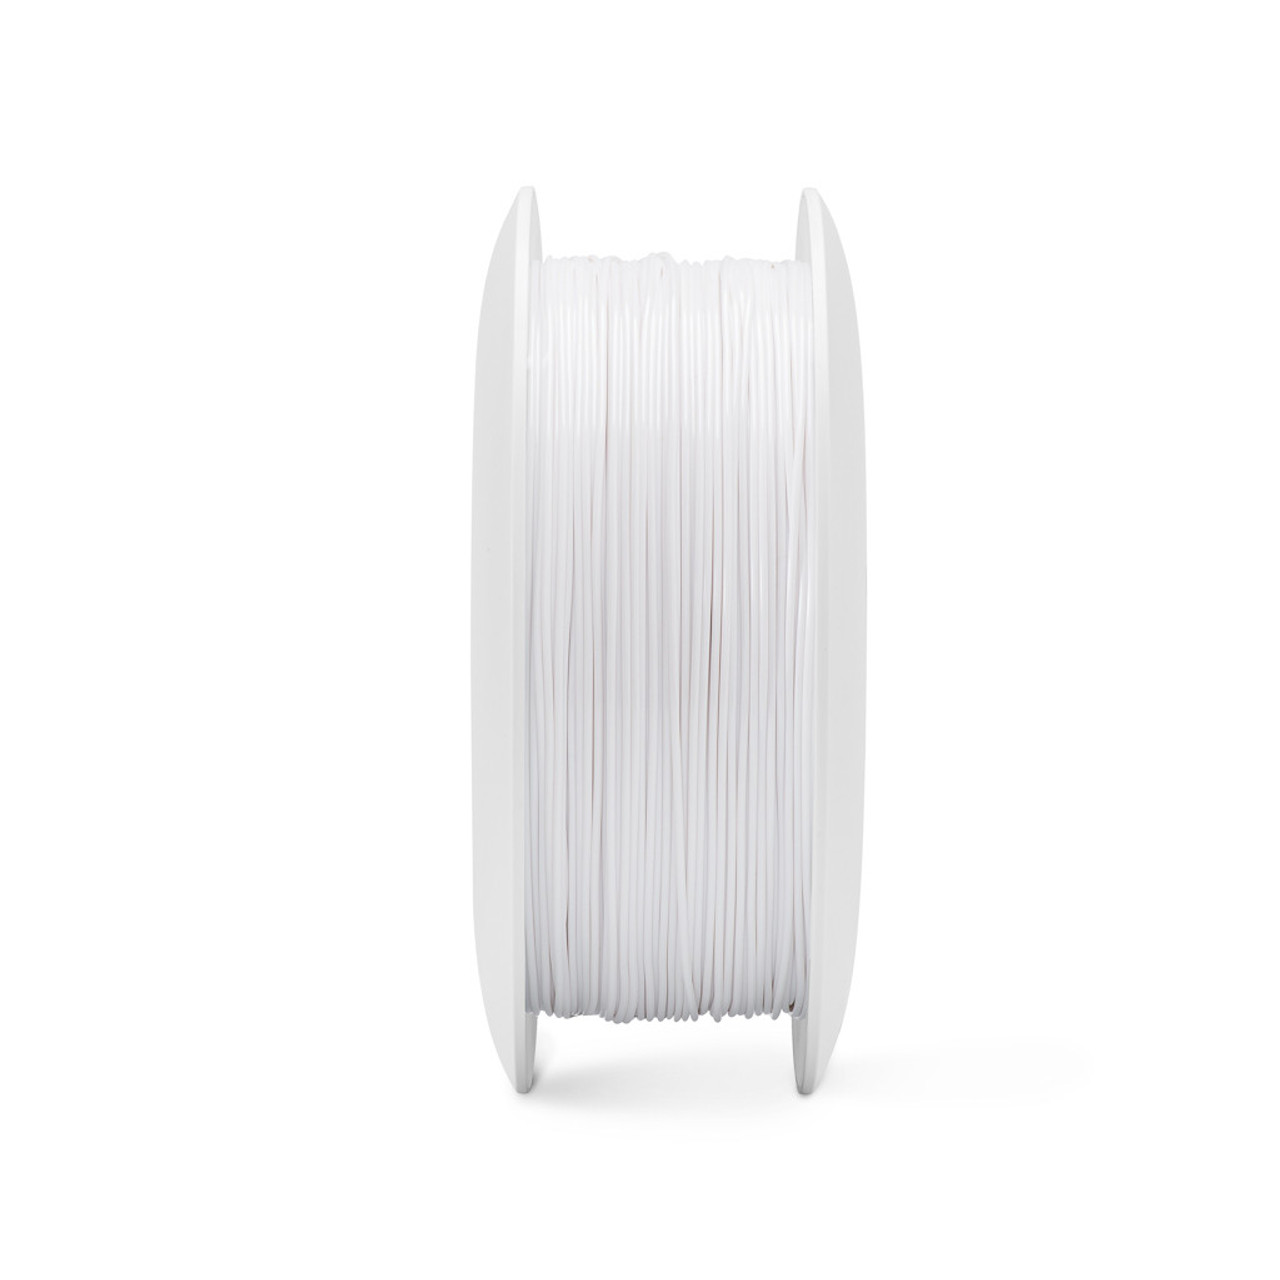 Fiberlogy ABS White 2.85mm 3D Printing Filament